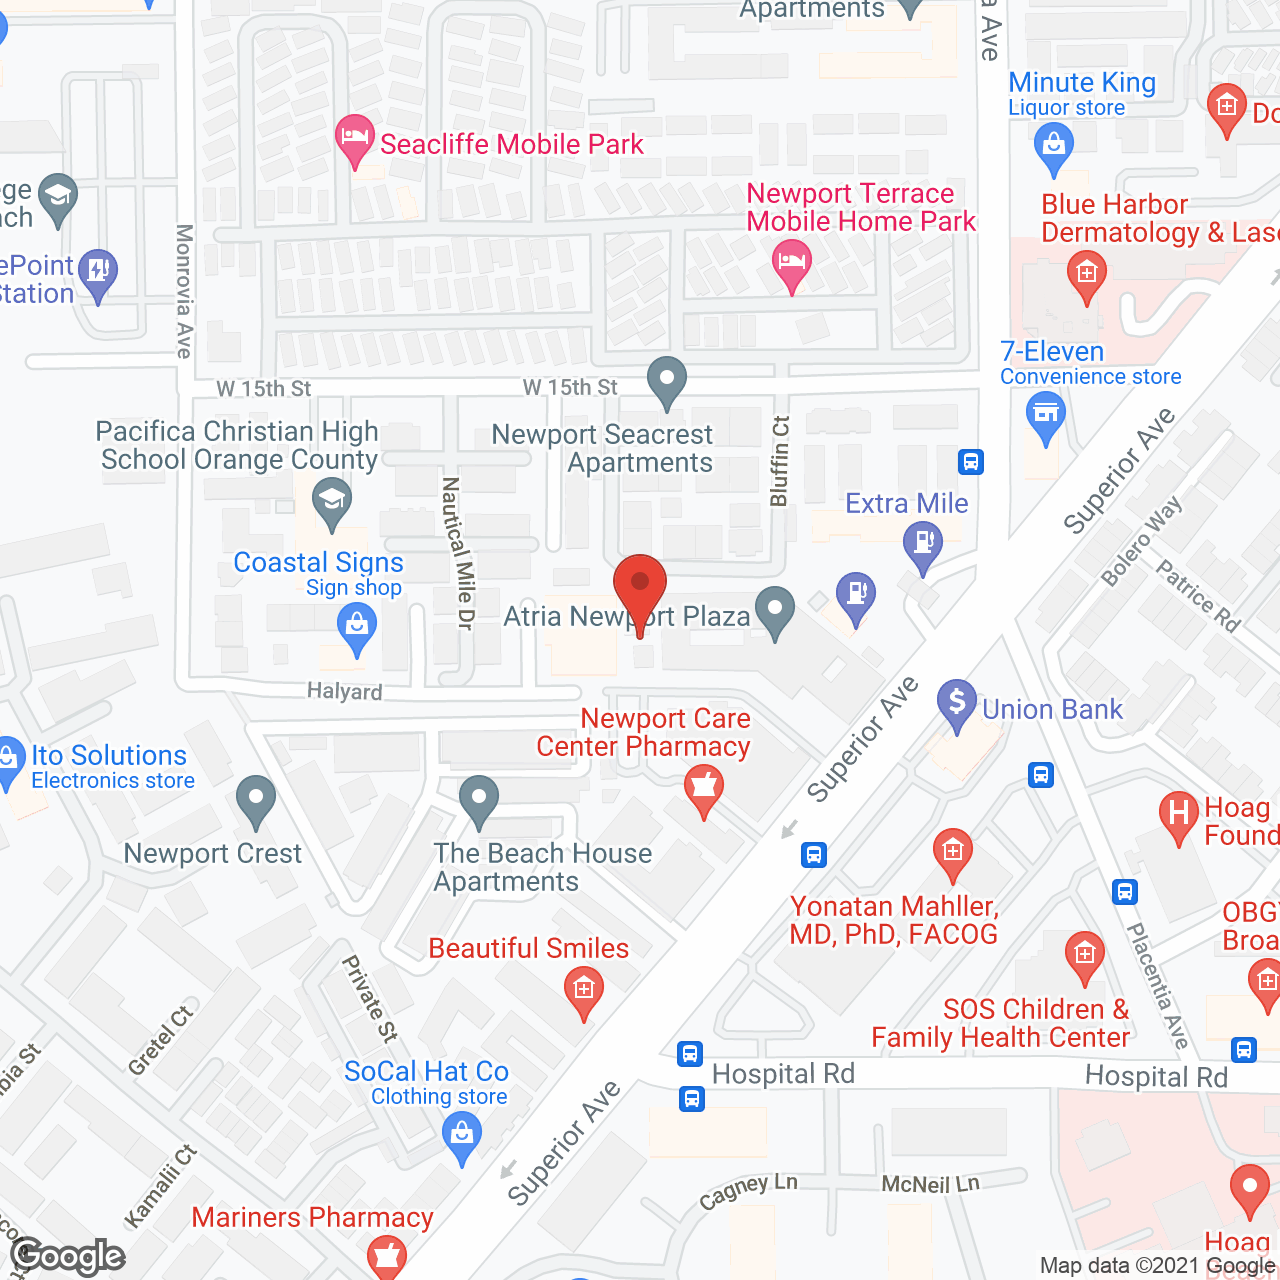 Atria Newport Plaza in google map